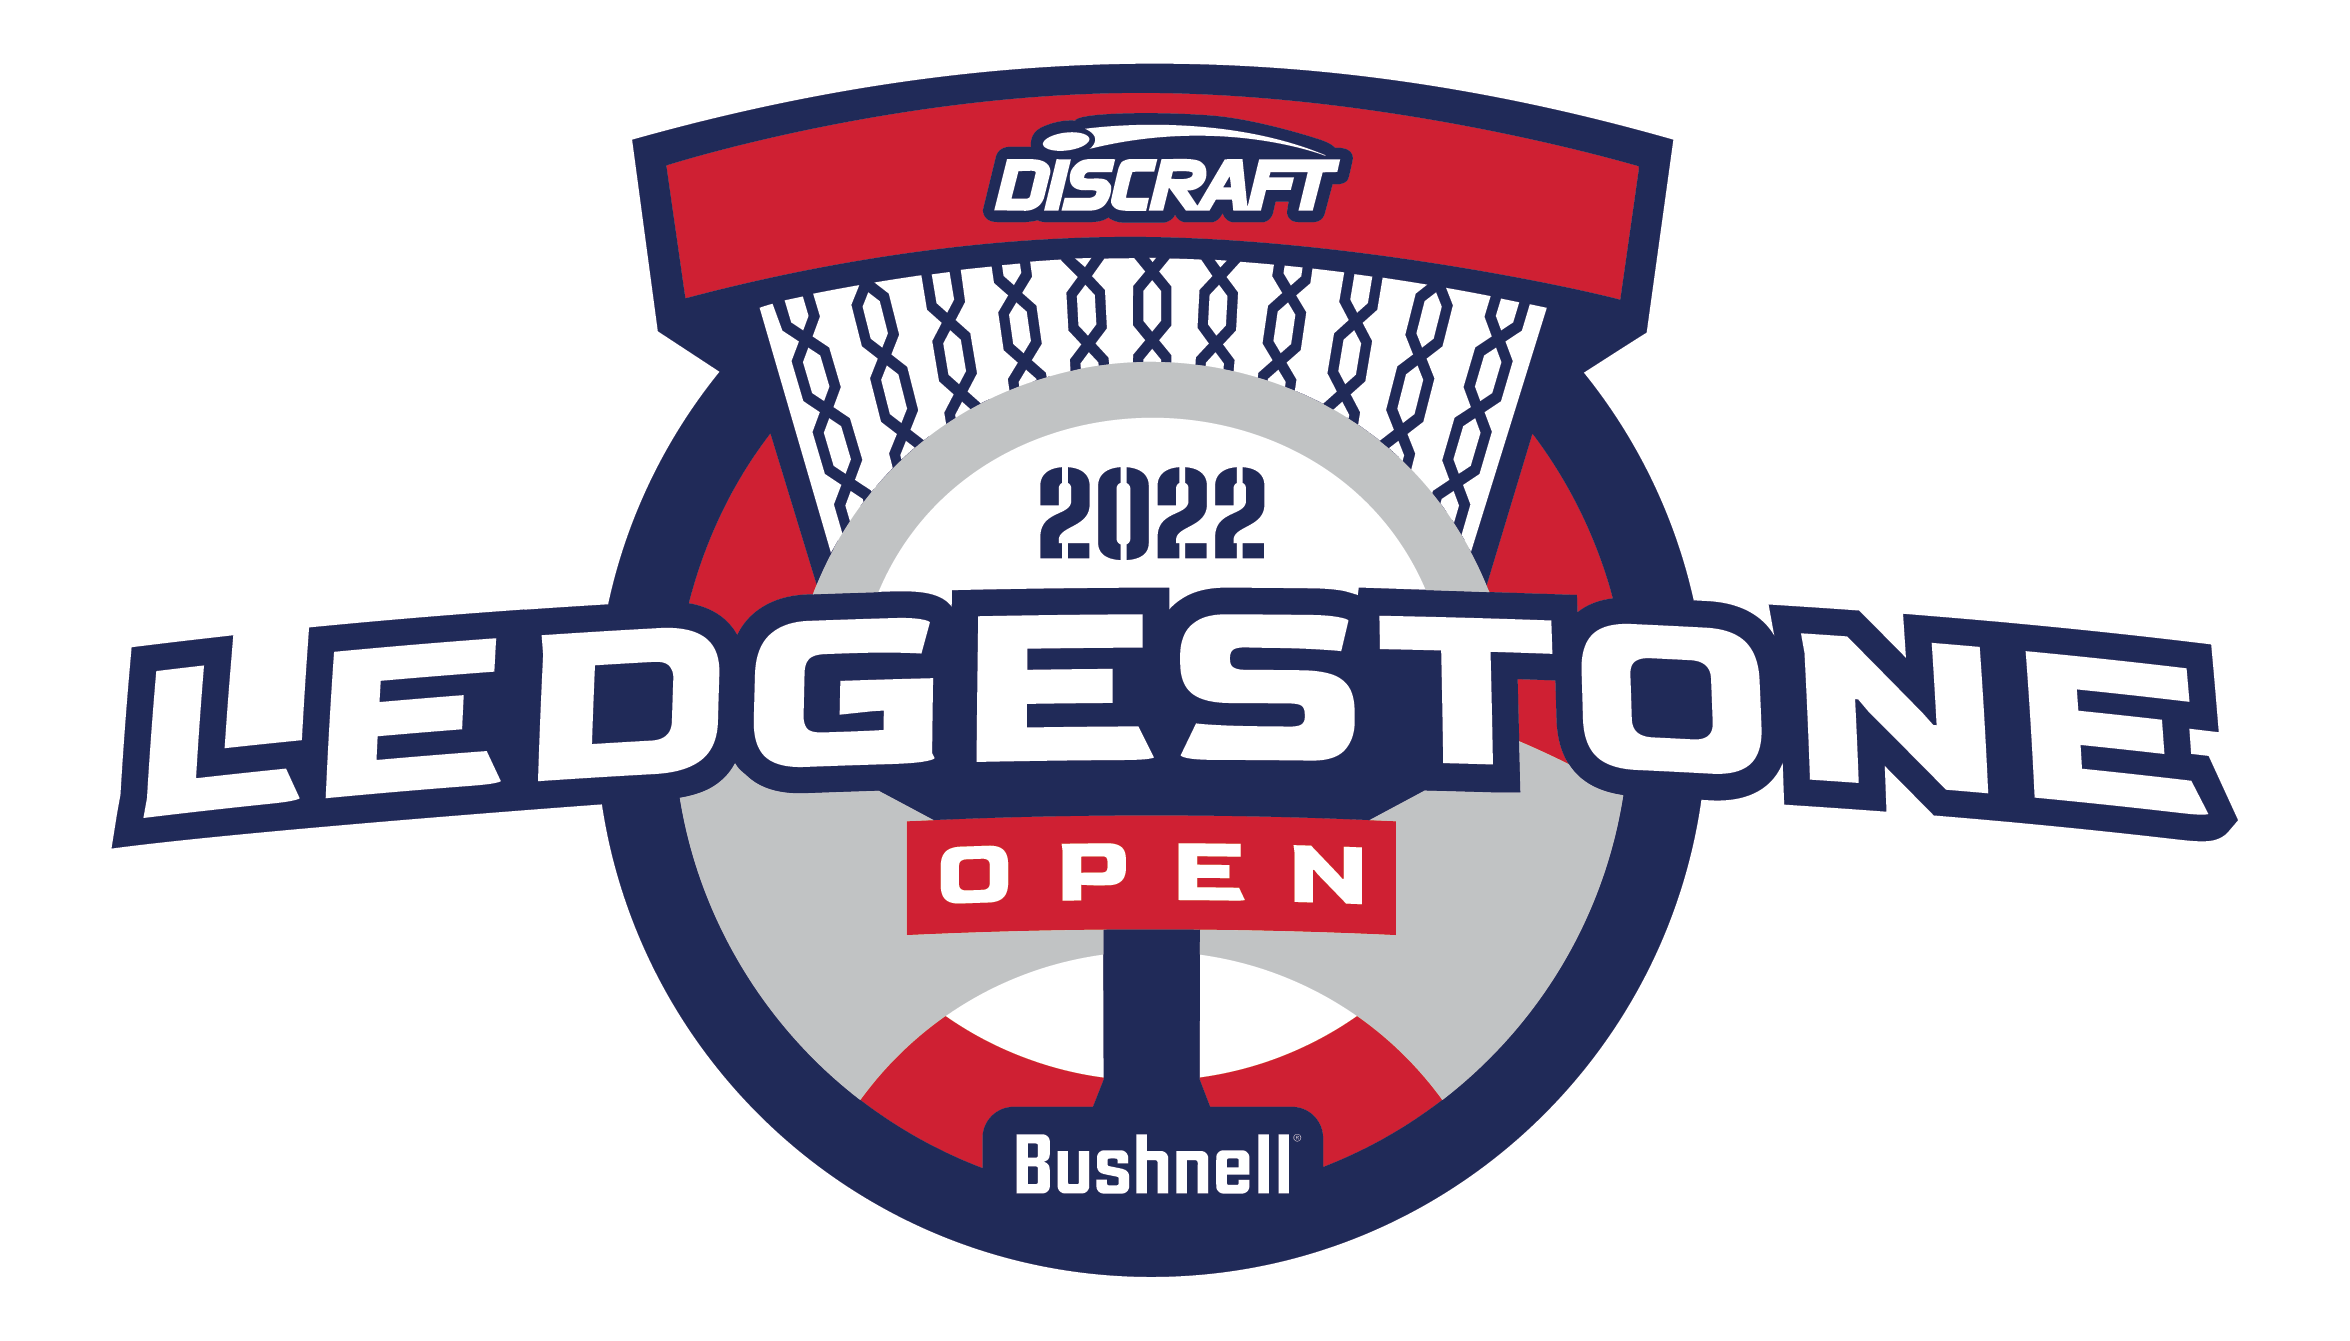 DGPT Discraft Ledgestone Open presented by Bushnell Scores